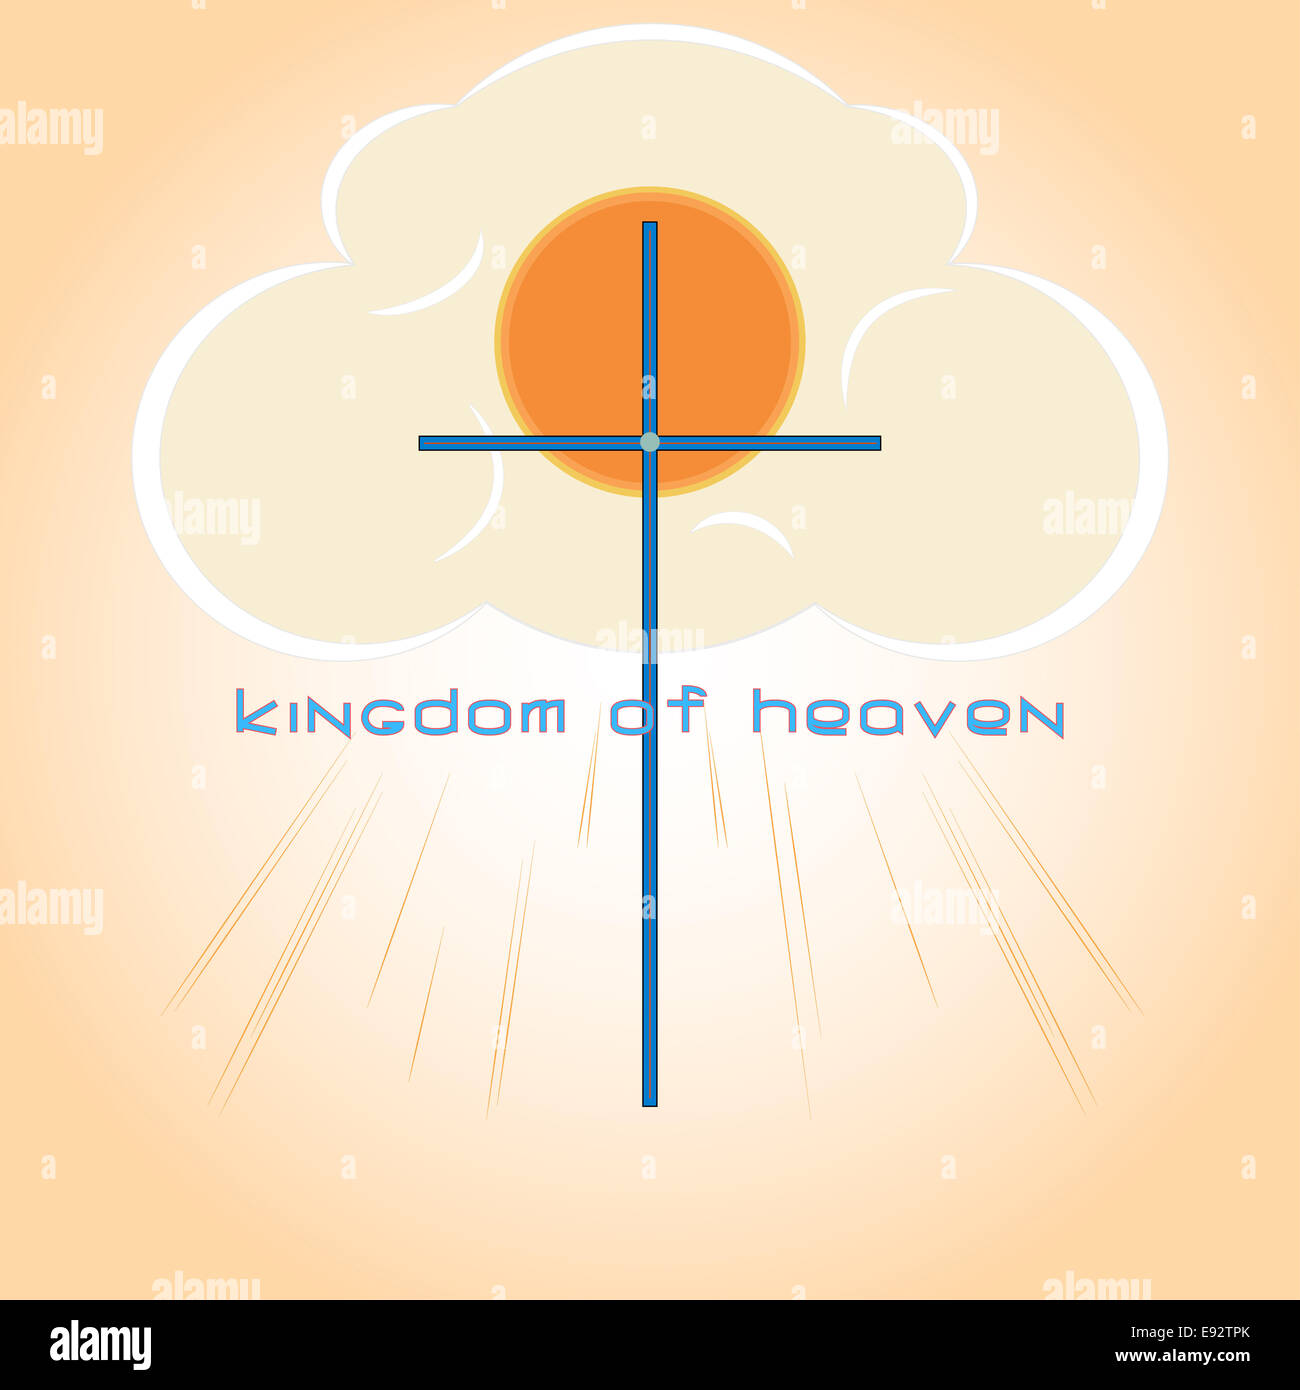 kingdom of heaven Stock Photo